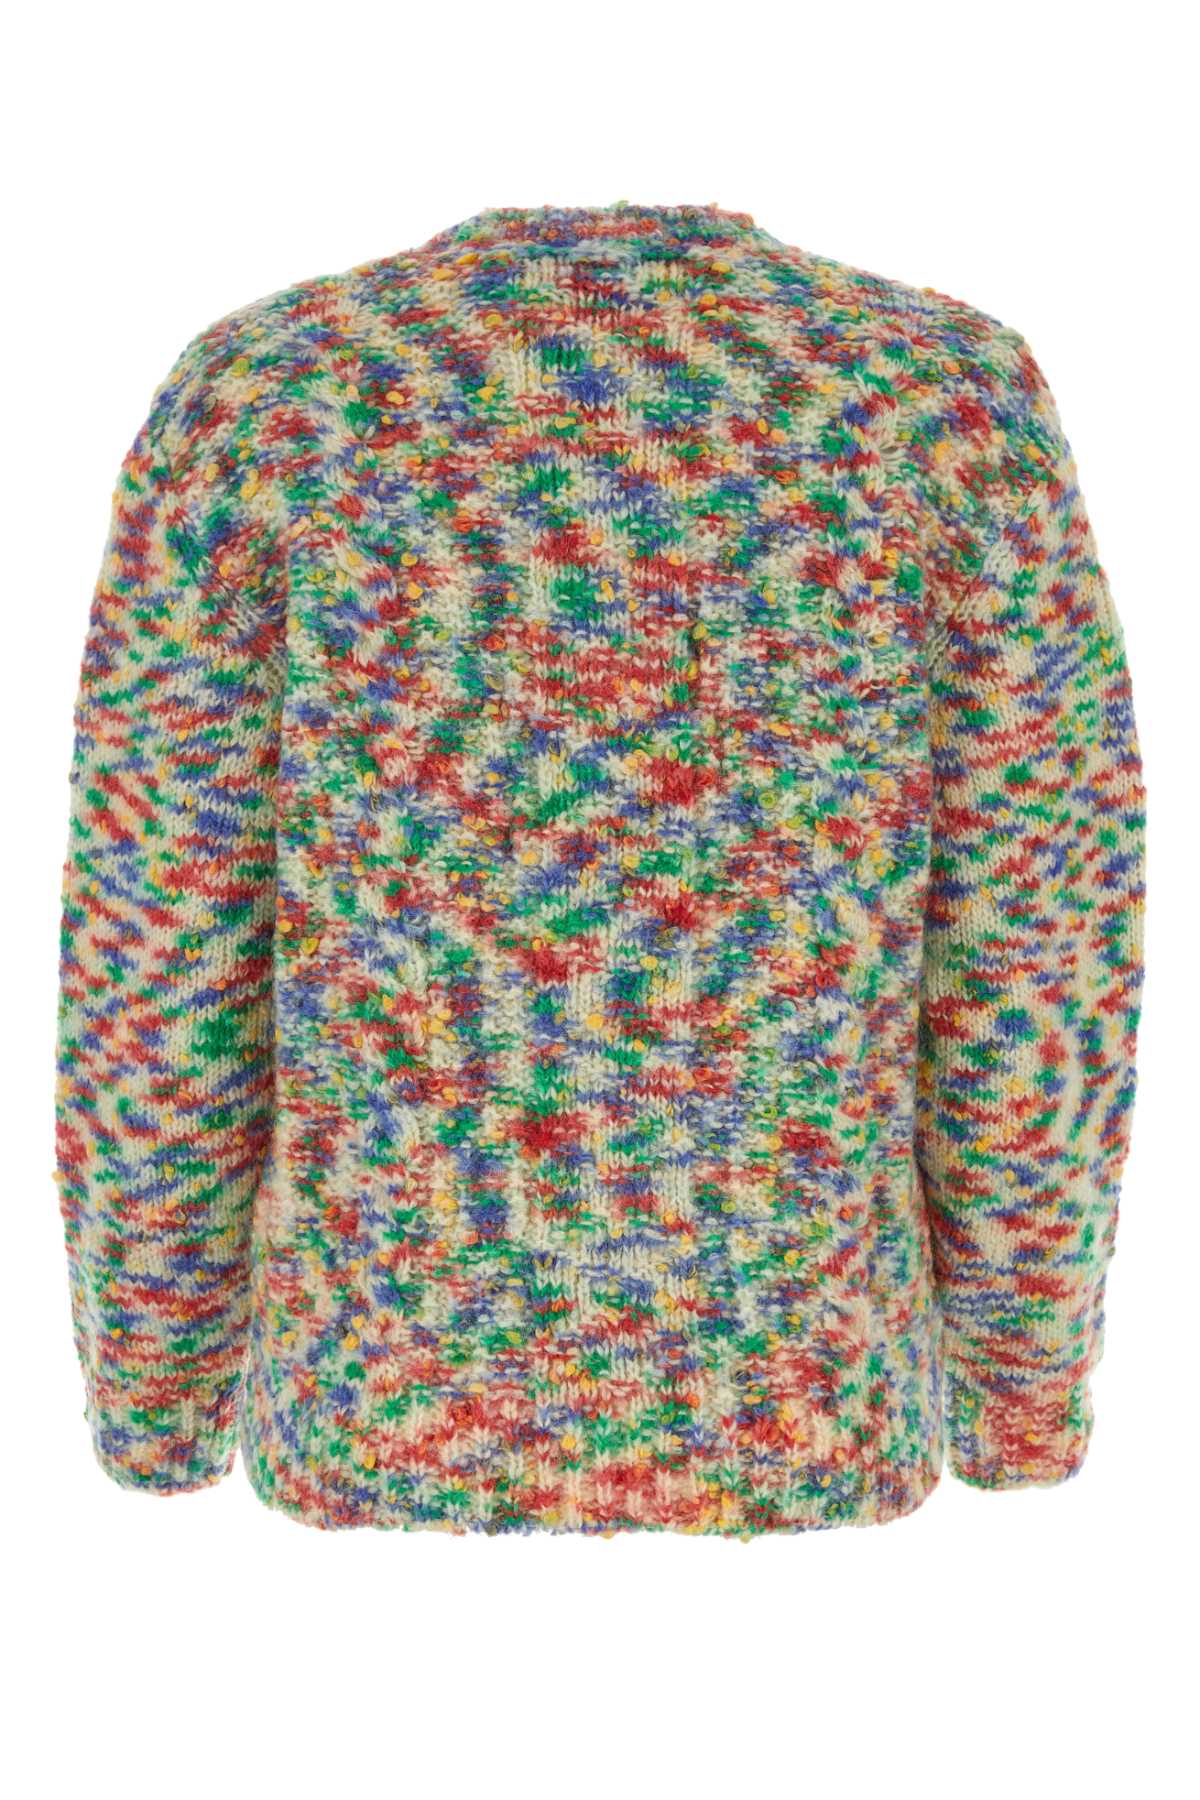 Apc Multicolor Cotton Blend Sweater